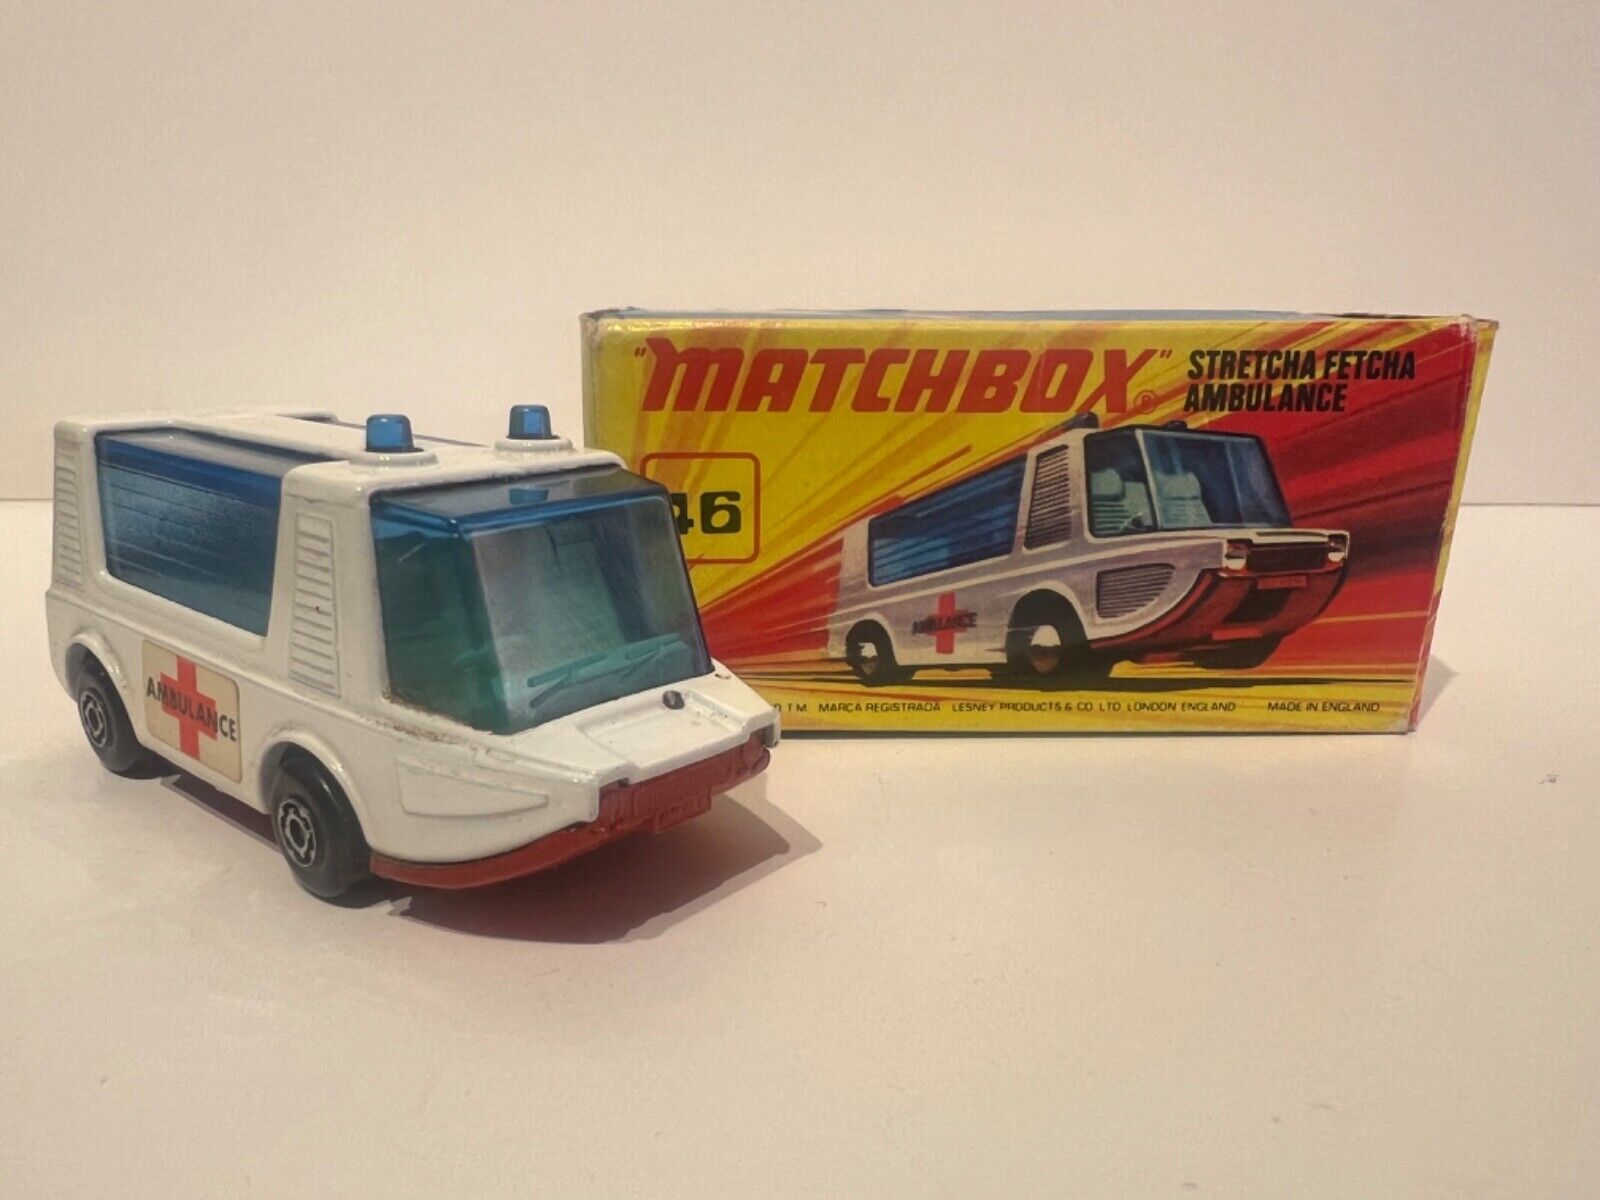 Matchbox 46 Stretcha Fetcha ambulance, boxed, original.